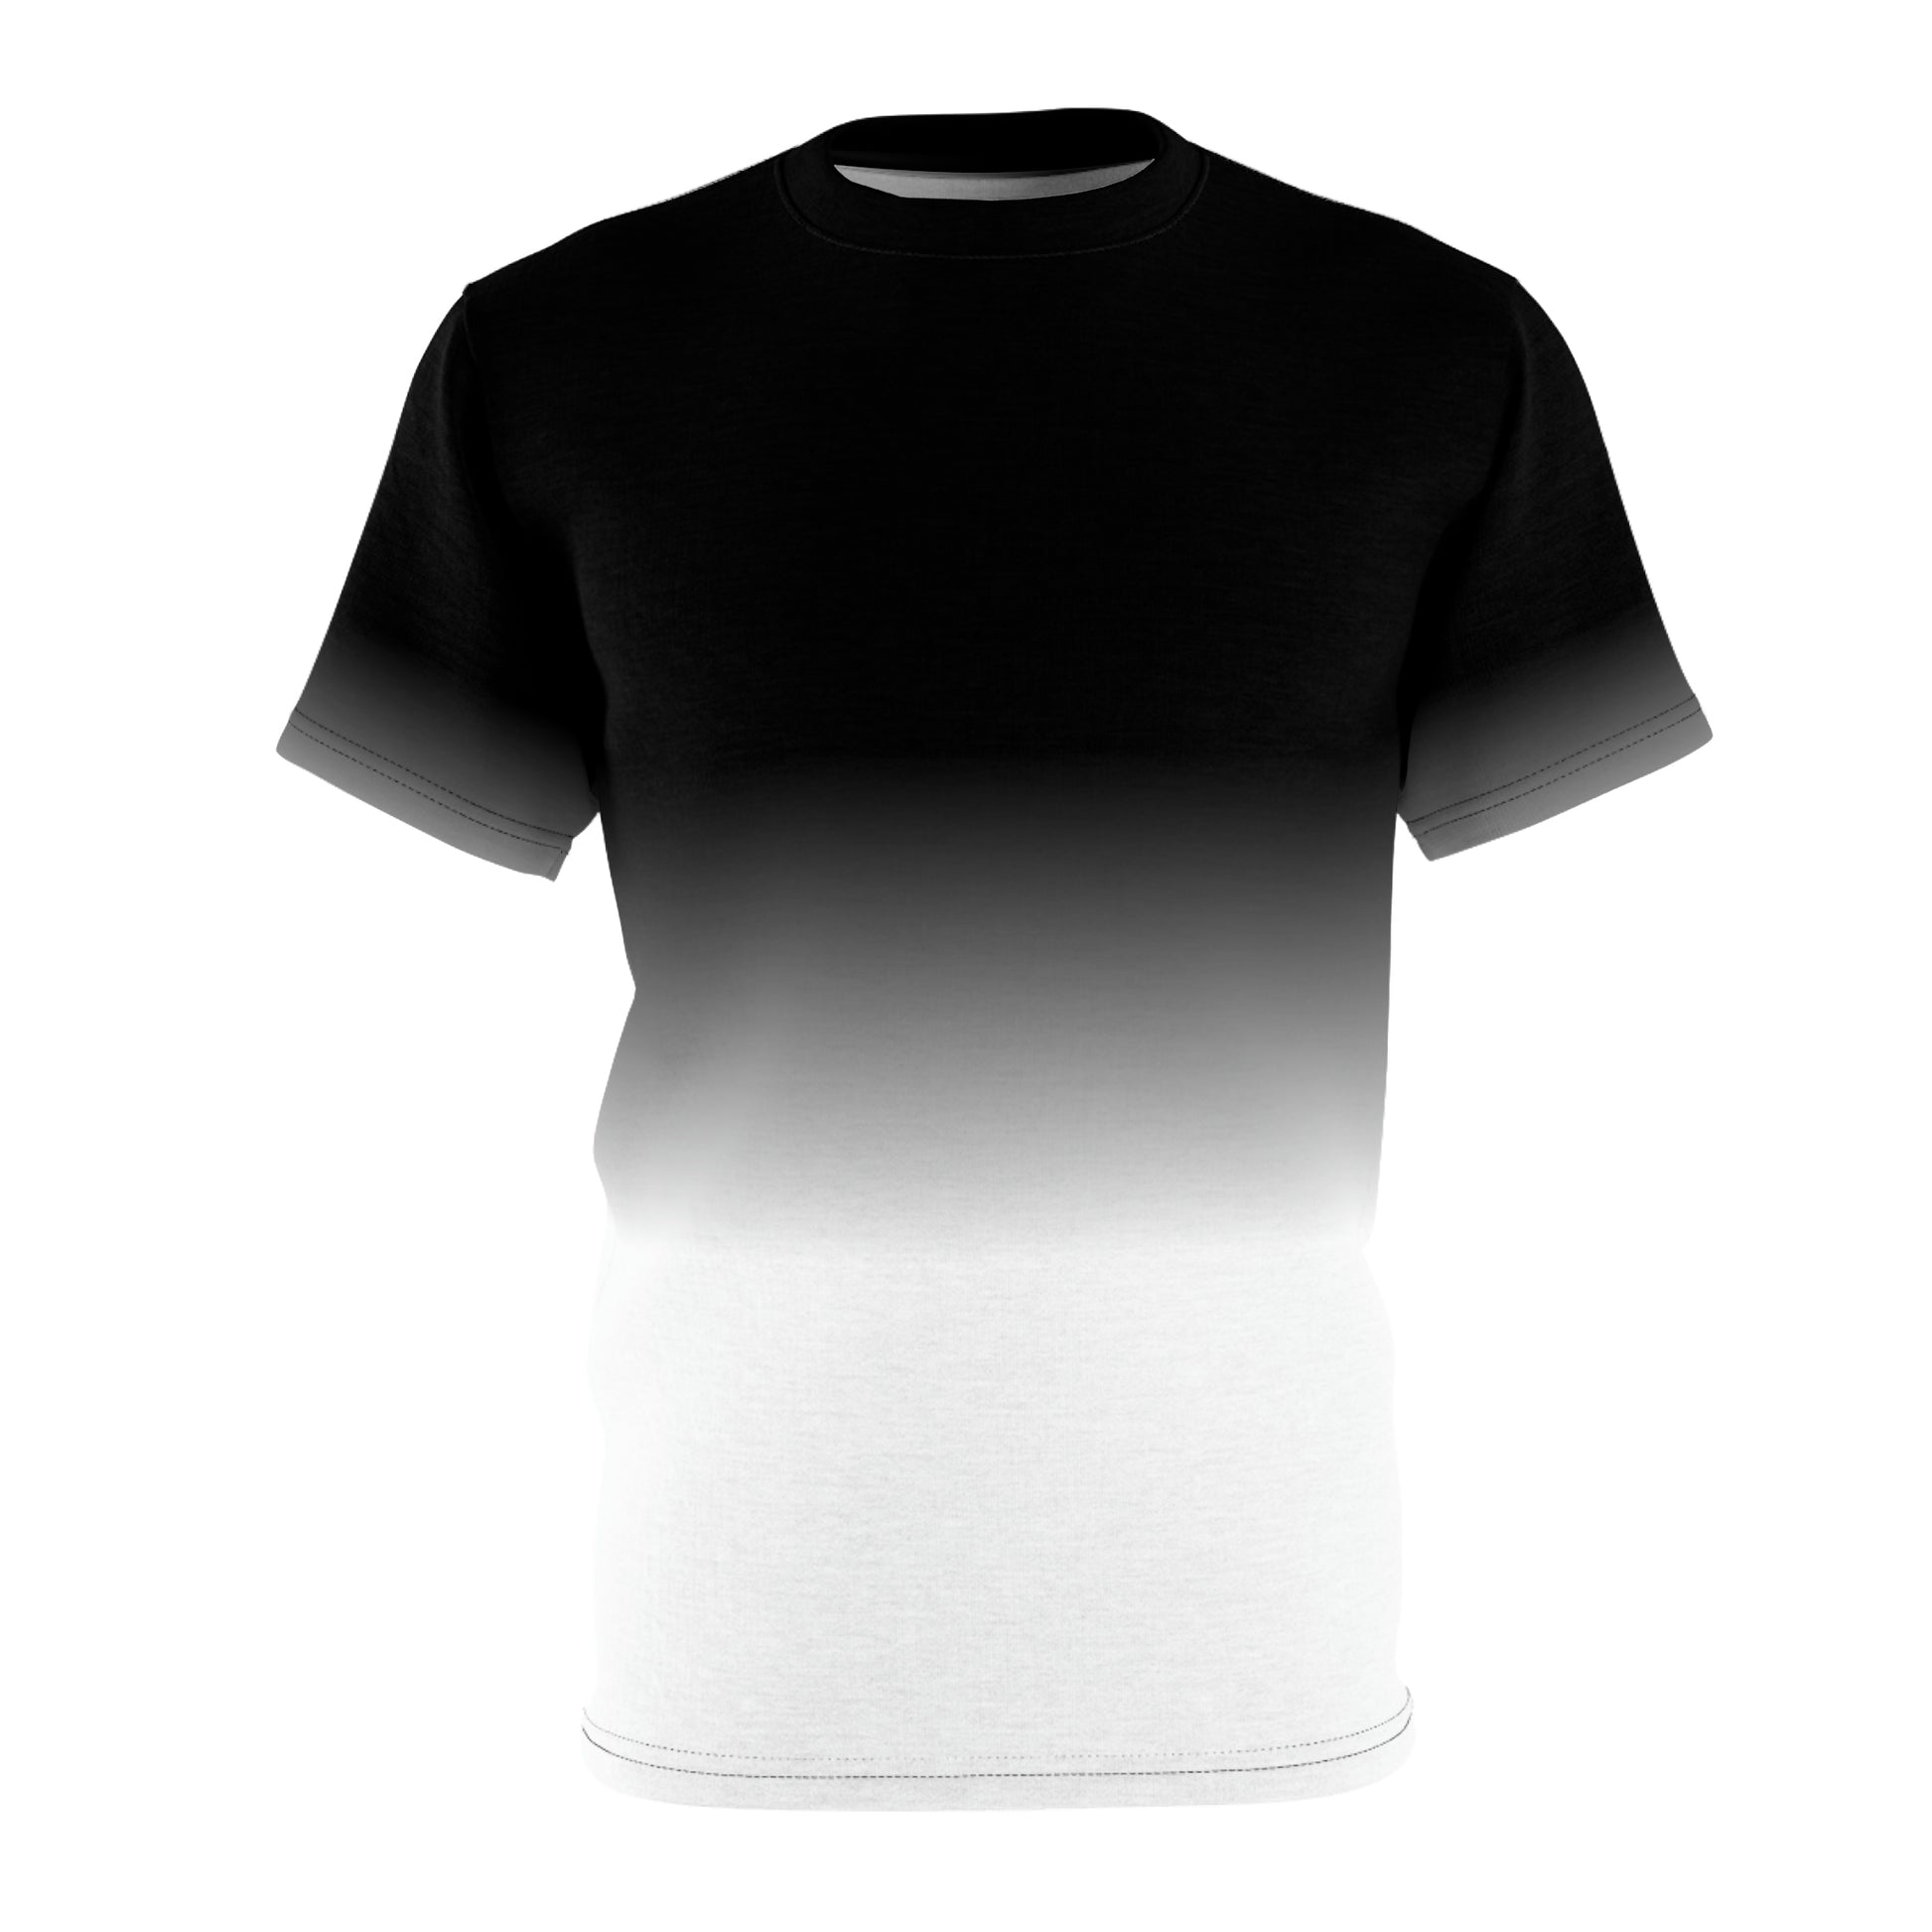 Black White Ombre Tshirt, Gradient Dip Tie Dye Men Women Adult Aesthetic Crewneck Designer Tee Short Sleeve Shirt Top Starcove Fashion